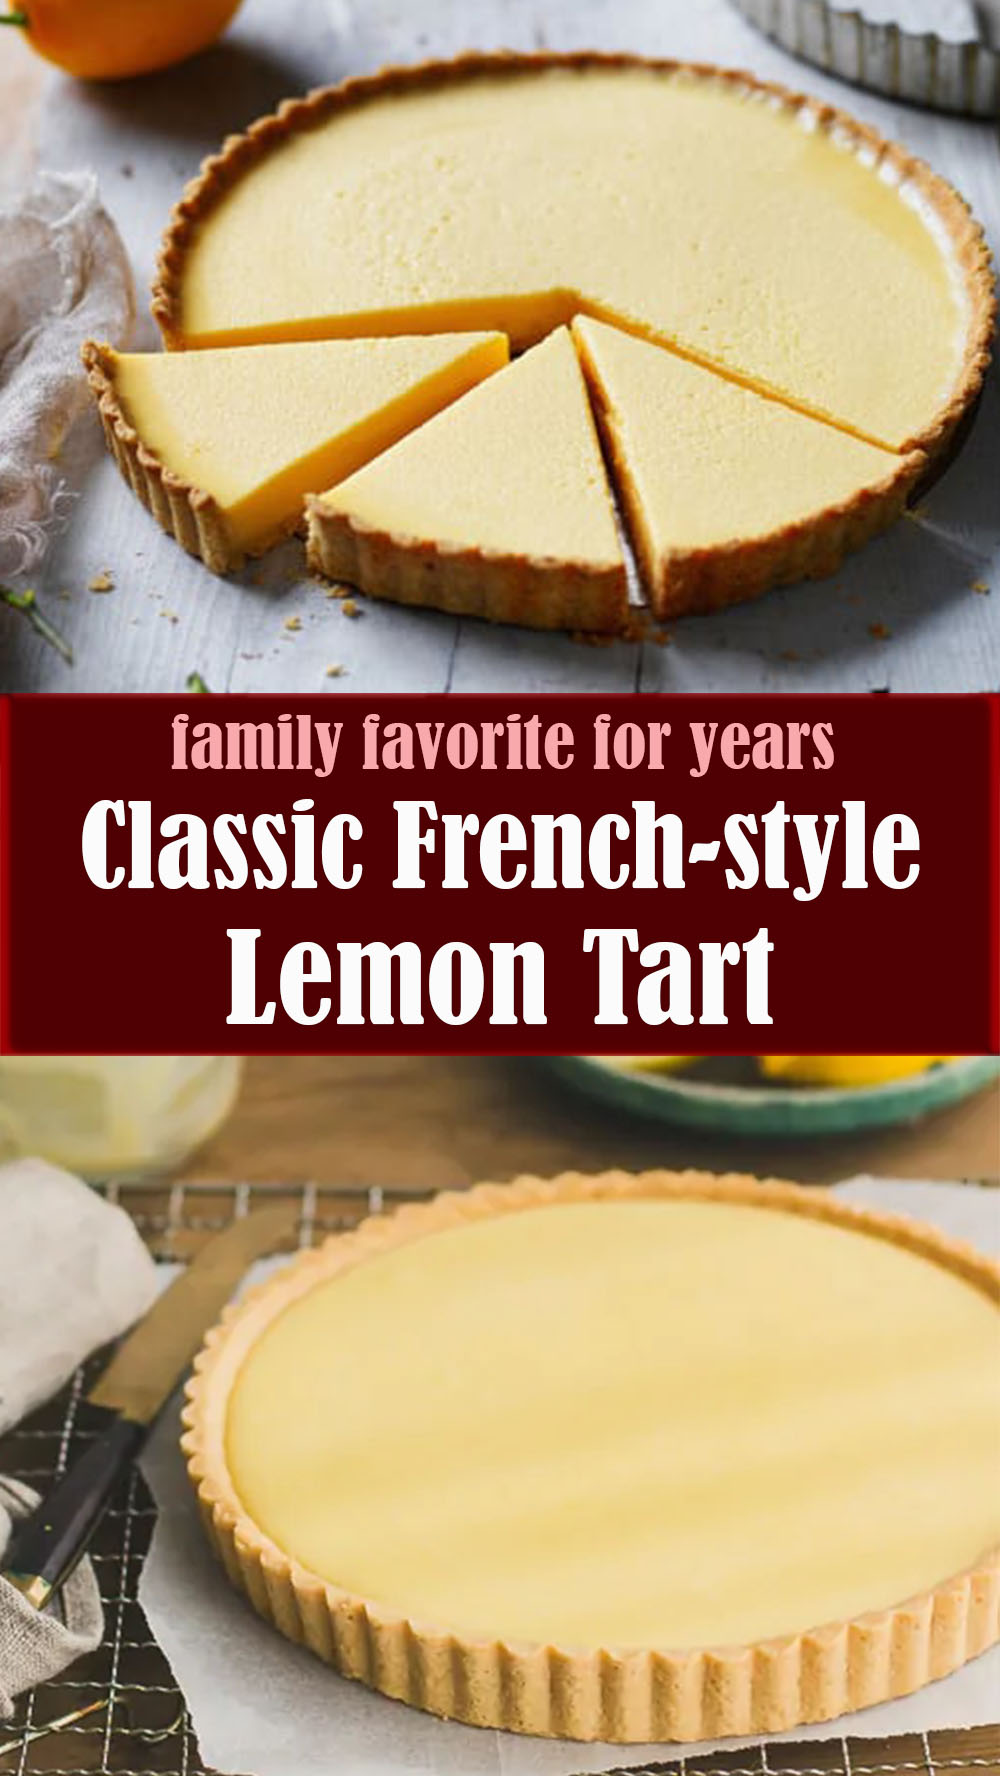 Classic French-style Lemon Tart Recipe